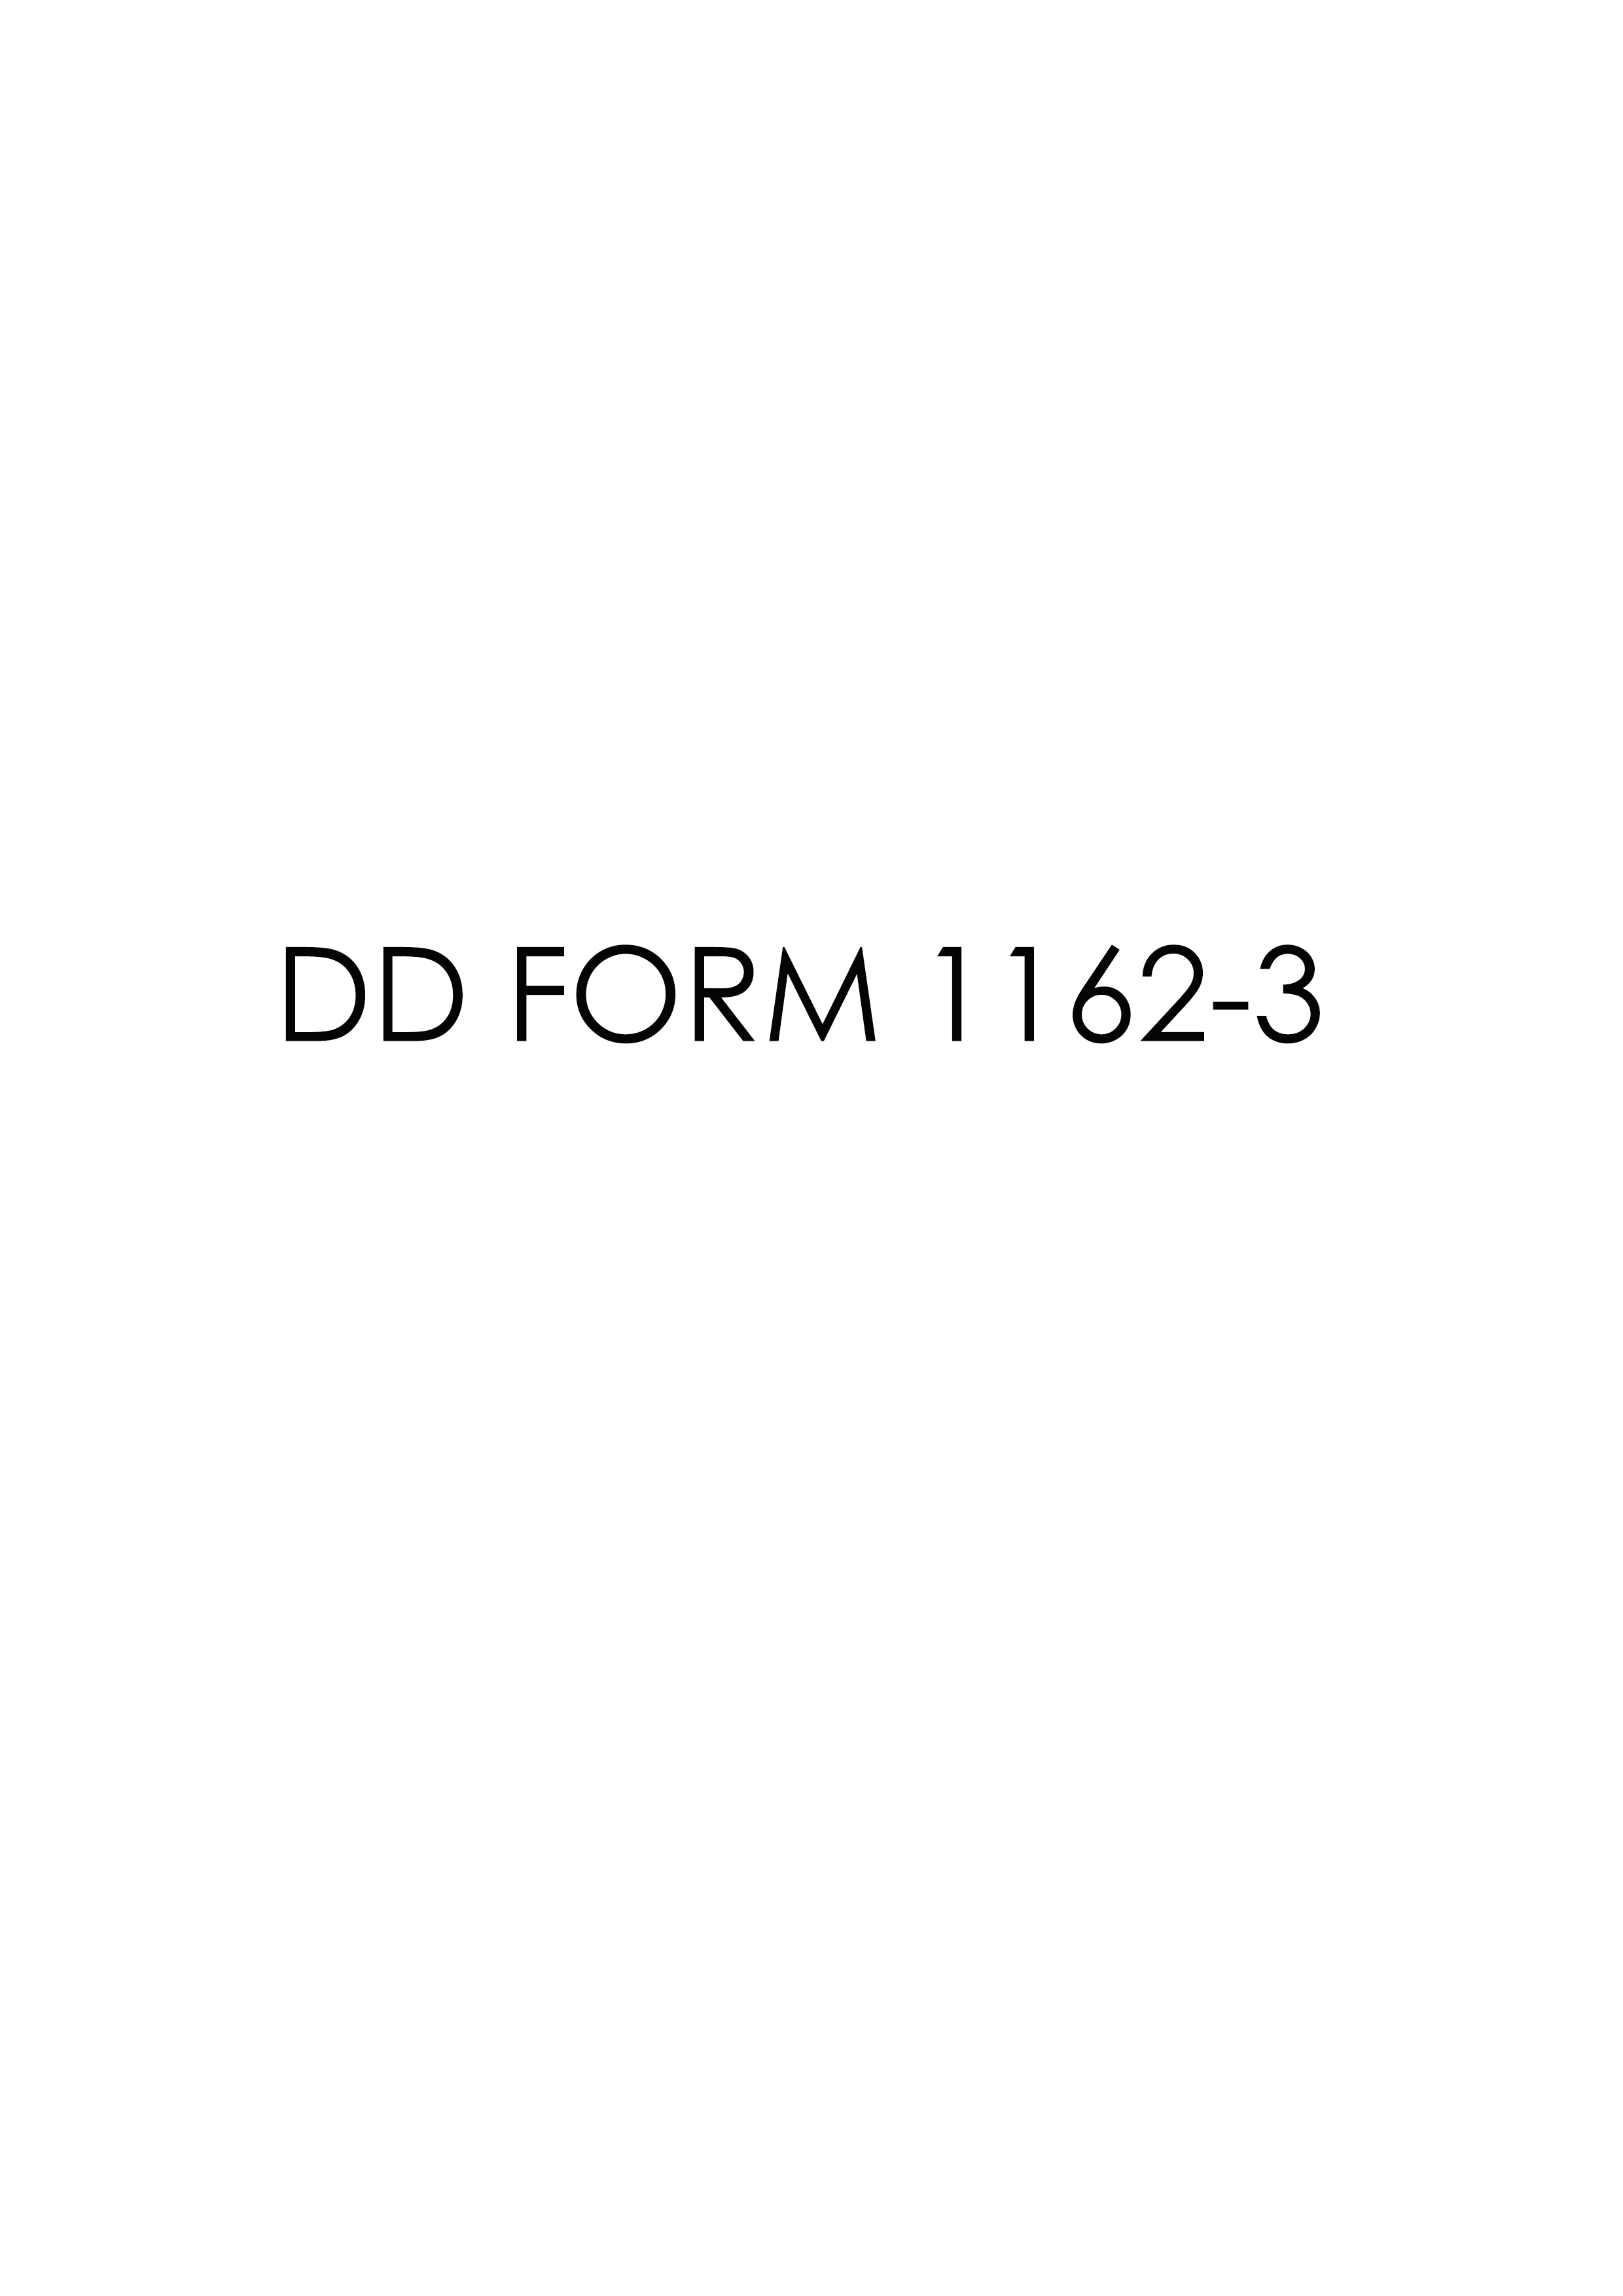 Download dd 1162-3 Form